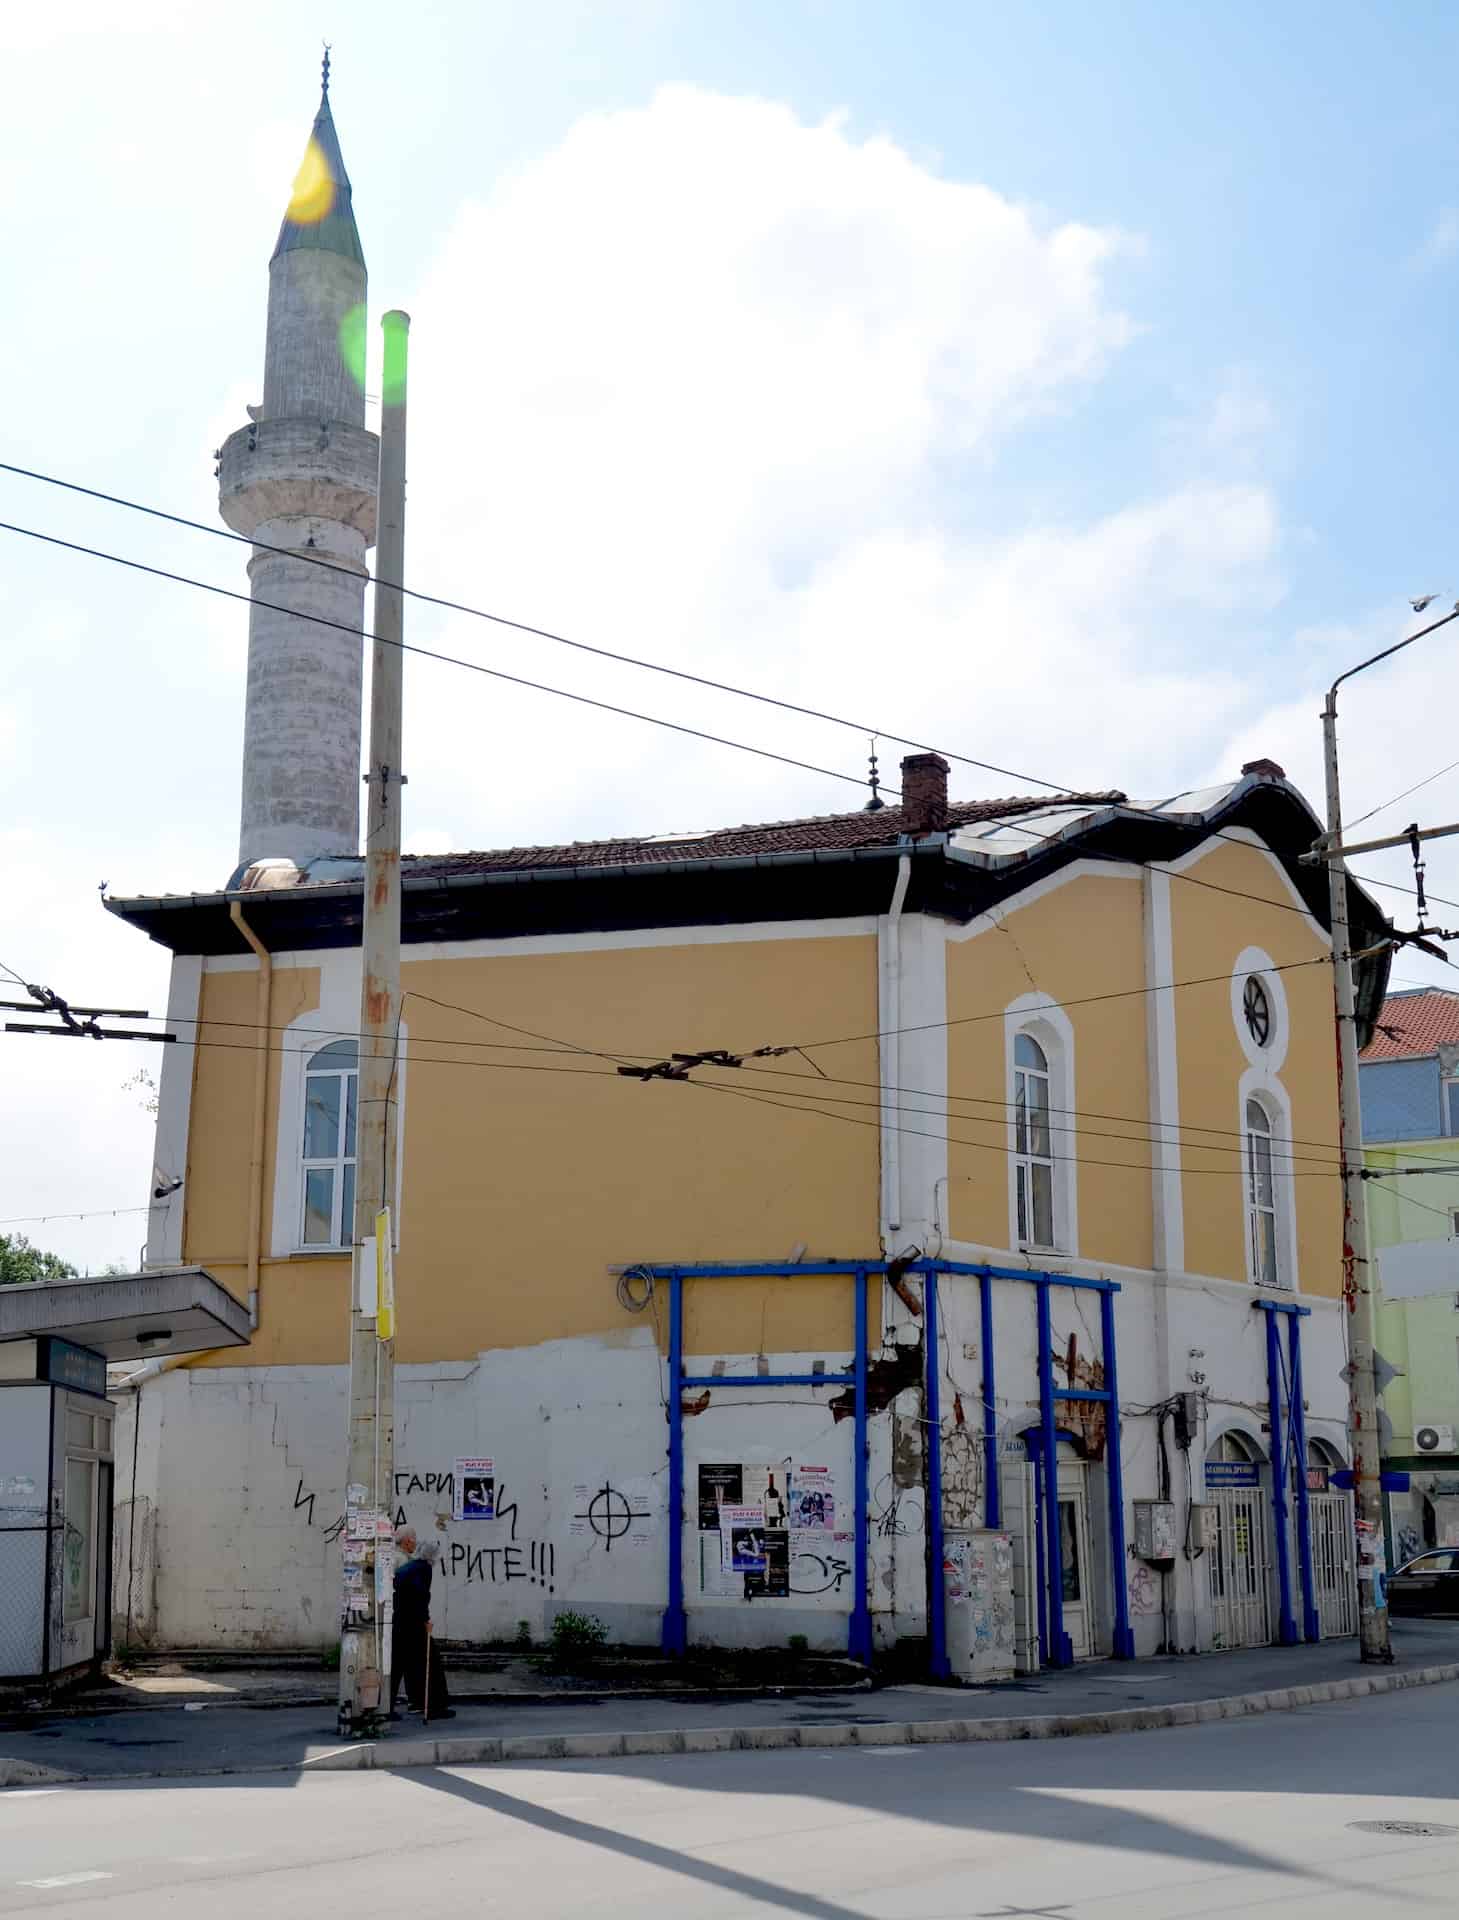 Said Pasha Mosque in Ruse, Bulgaria